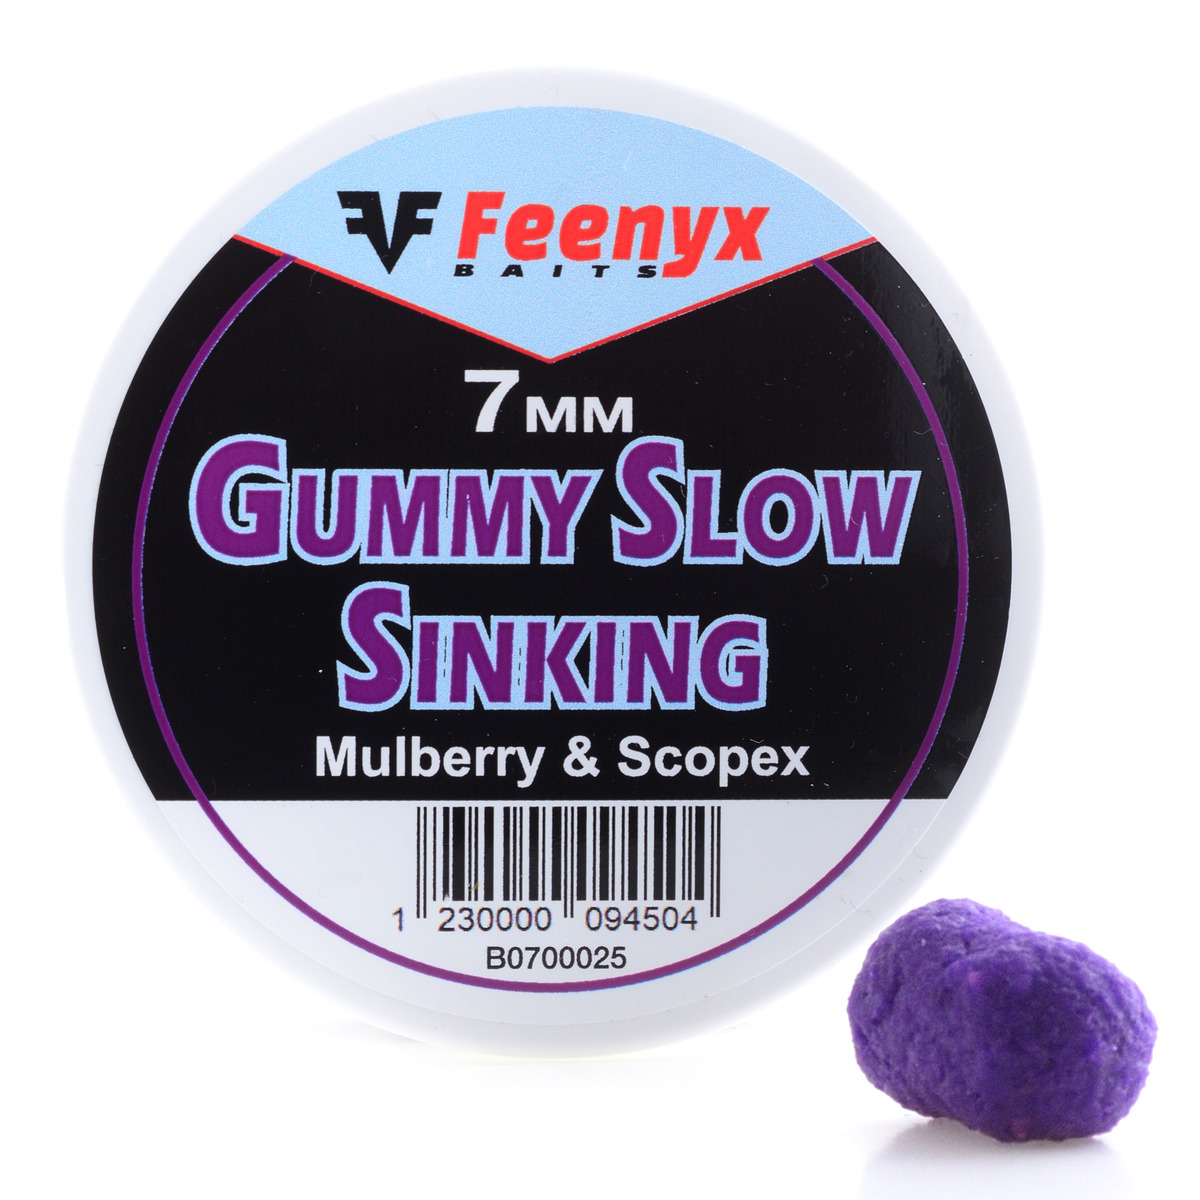 Feenyx Gummy Slow Sinking Mulberry & Scopex - 7 mm